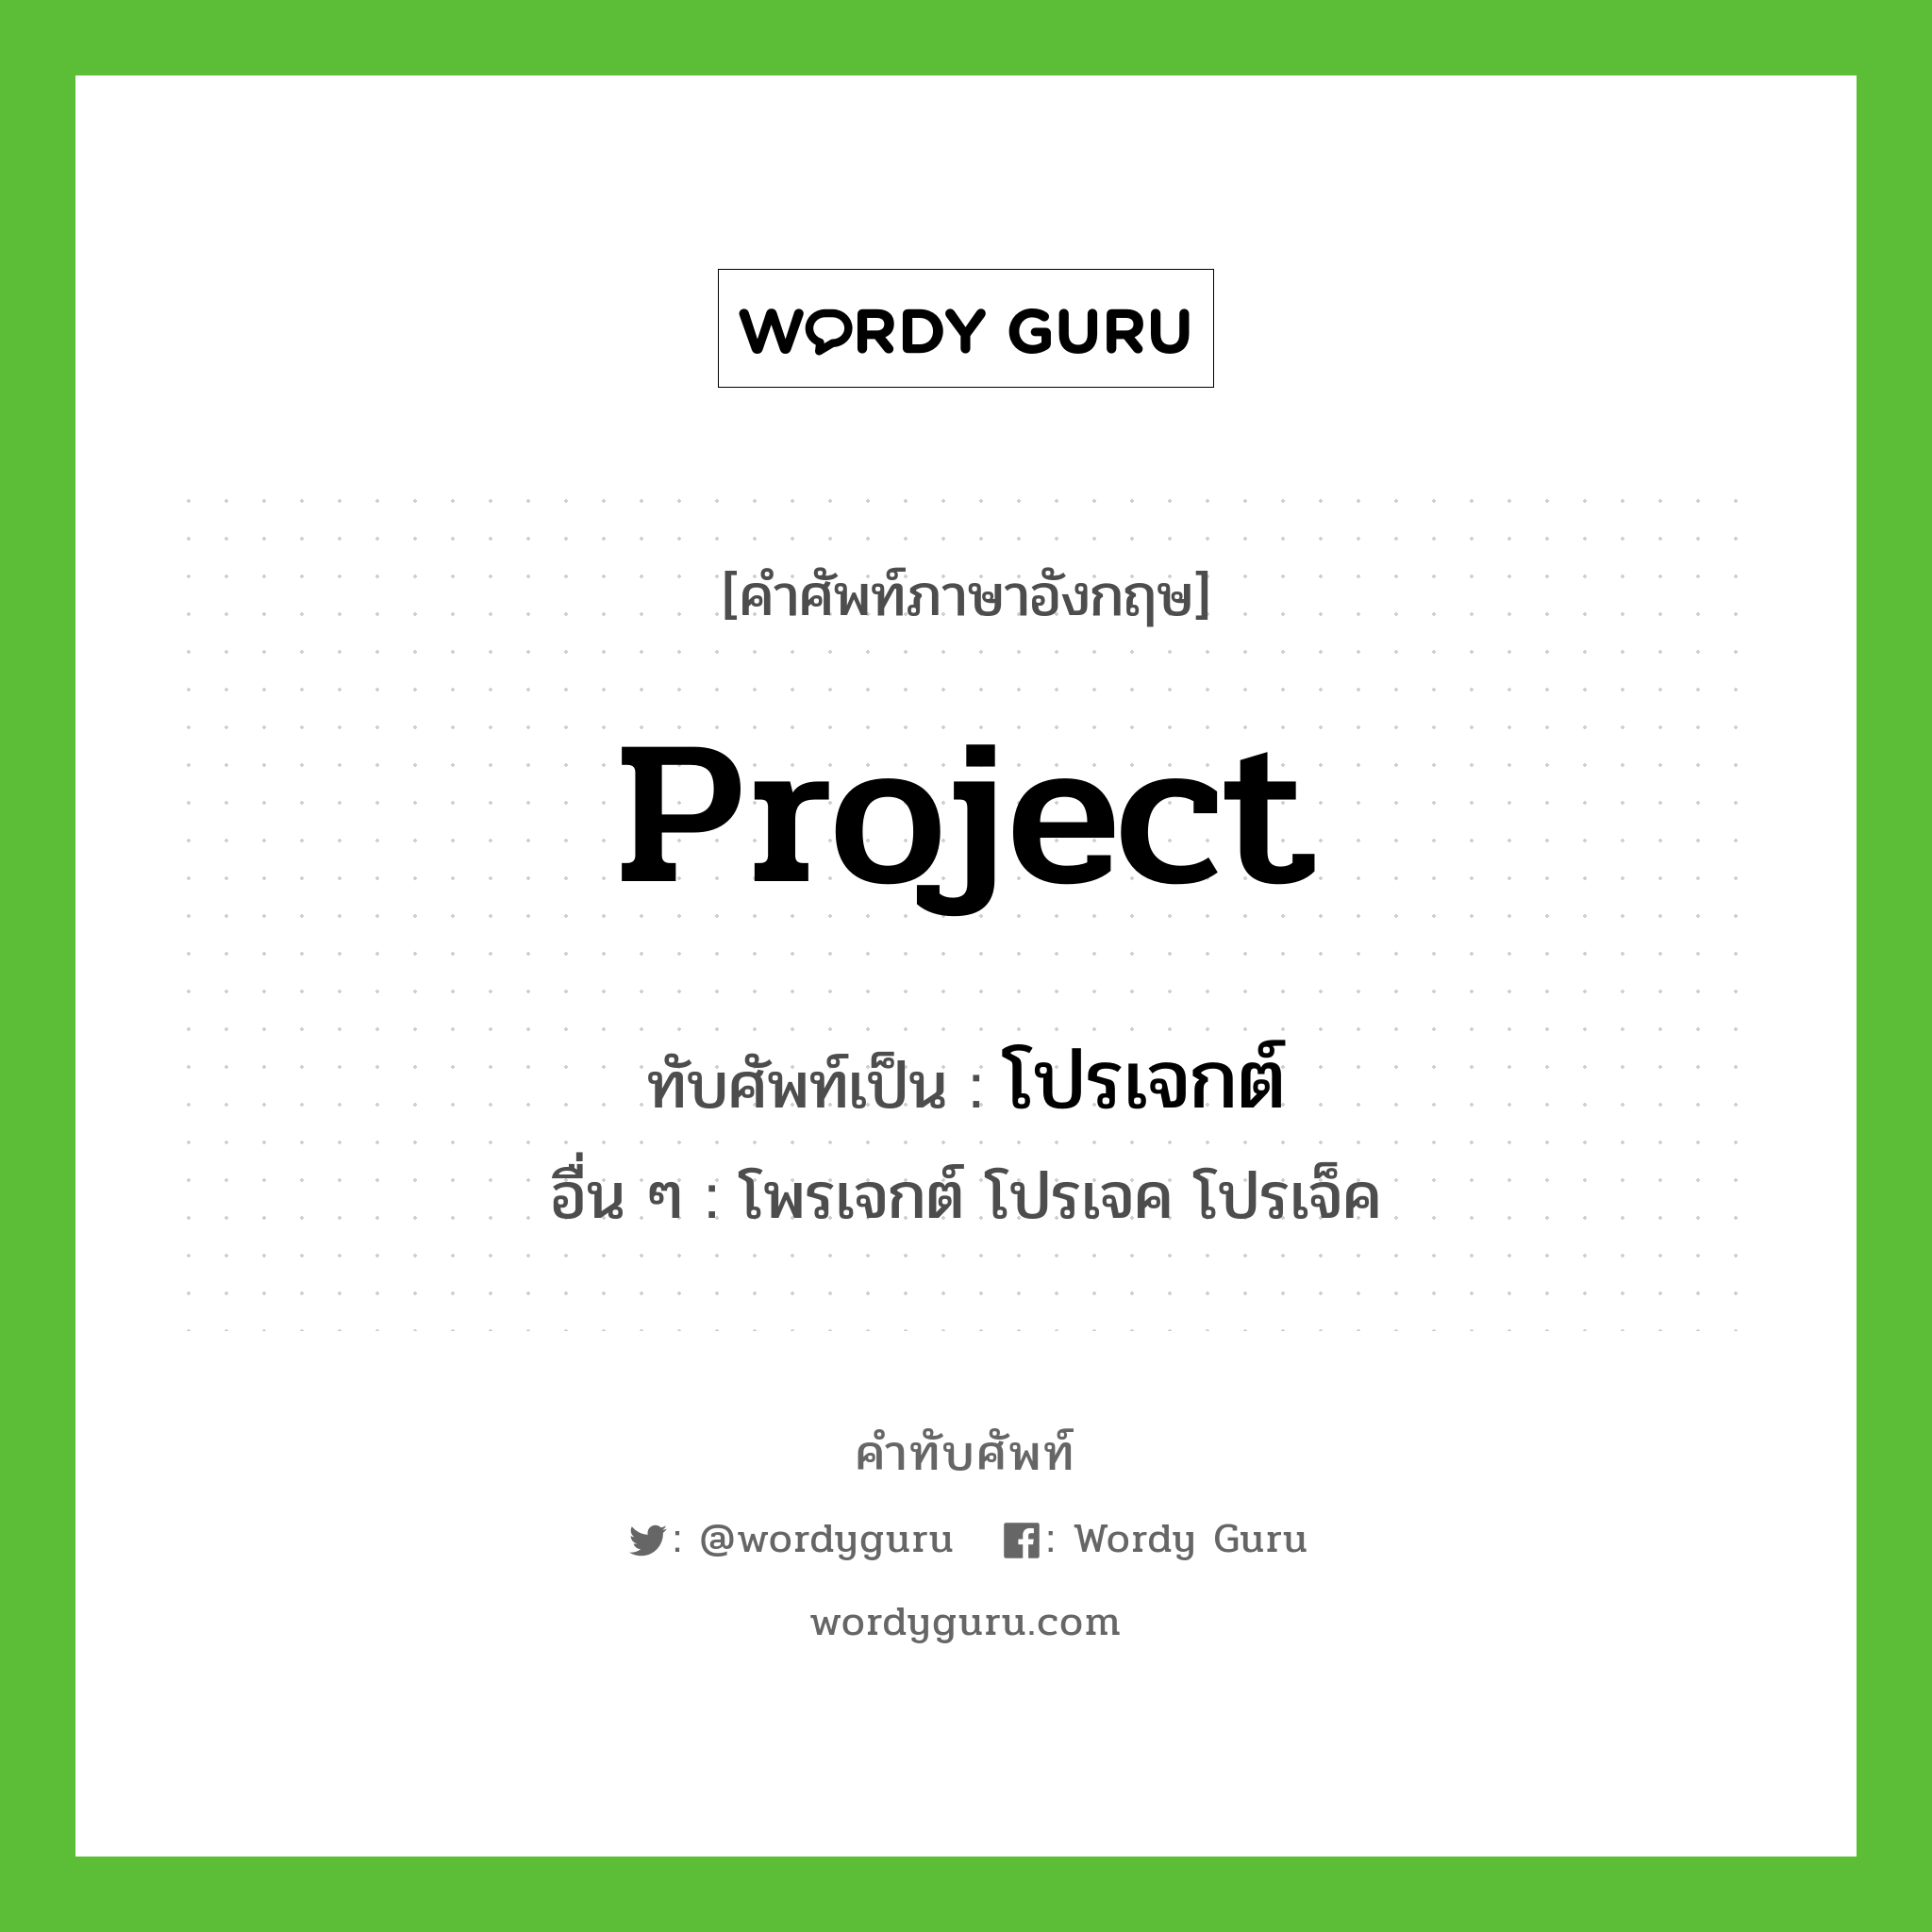 Project เขียนเป็นคำไทยว่าอะไร? | Wordy Guru